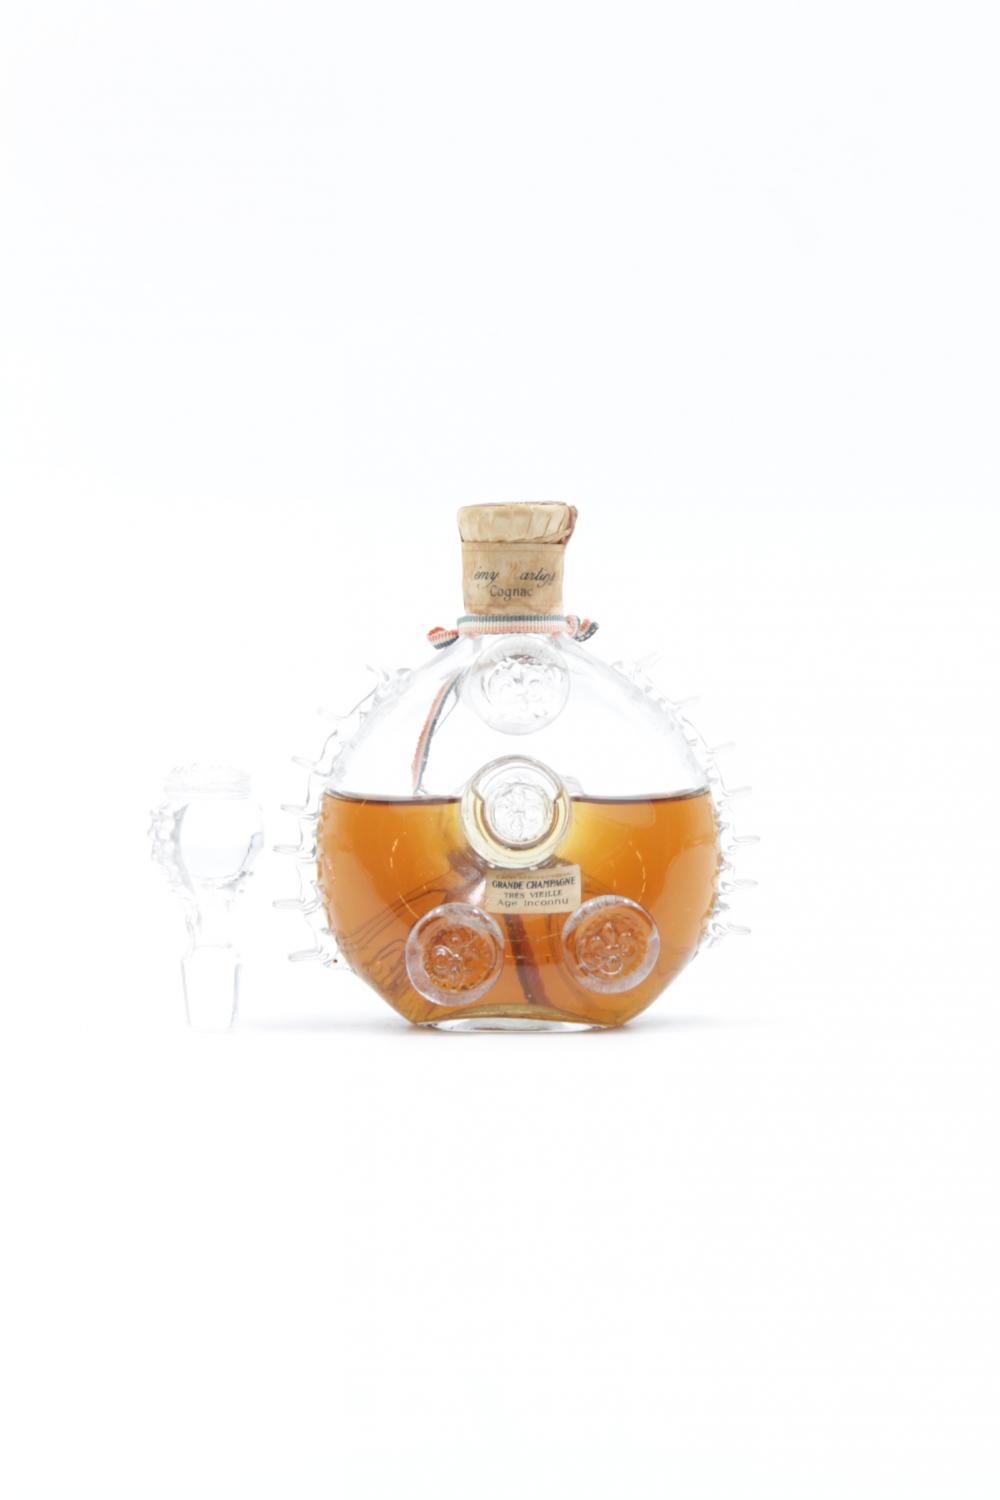 Remy Martin Louis XIII Cognac - Miniature Decanter Set - Just